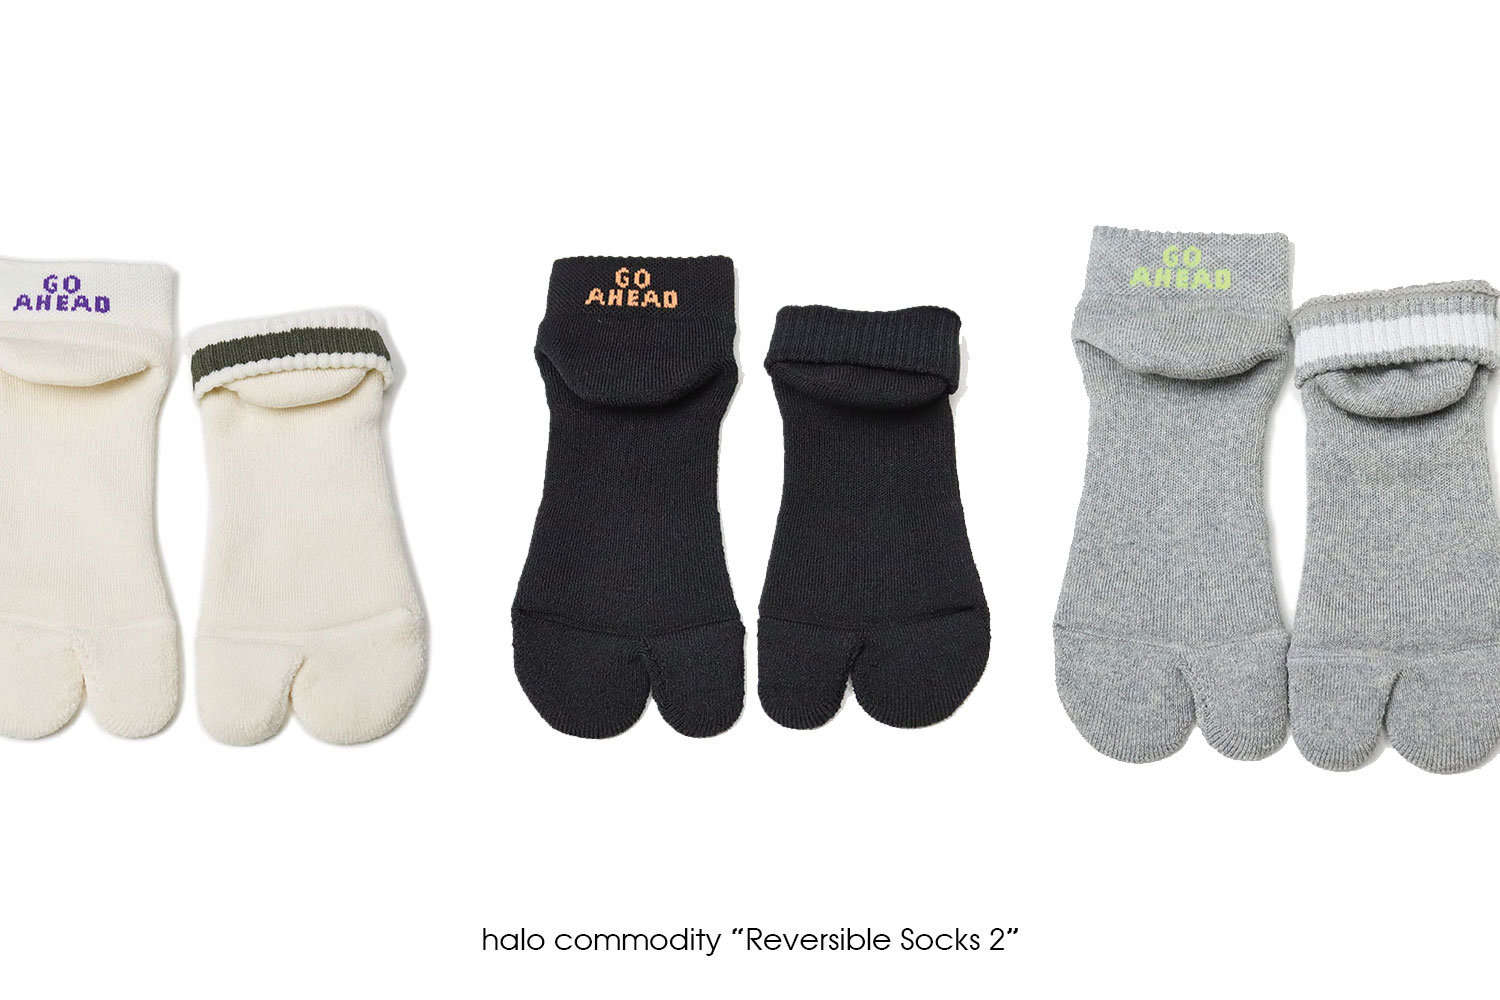 halo commodity "Reversible Socks 2"